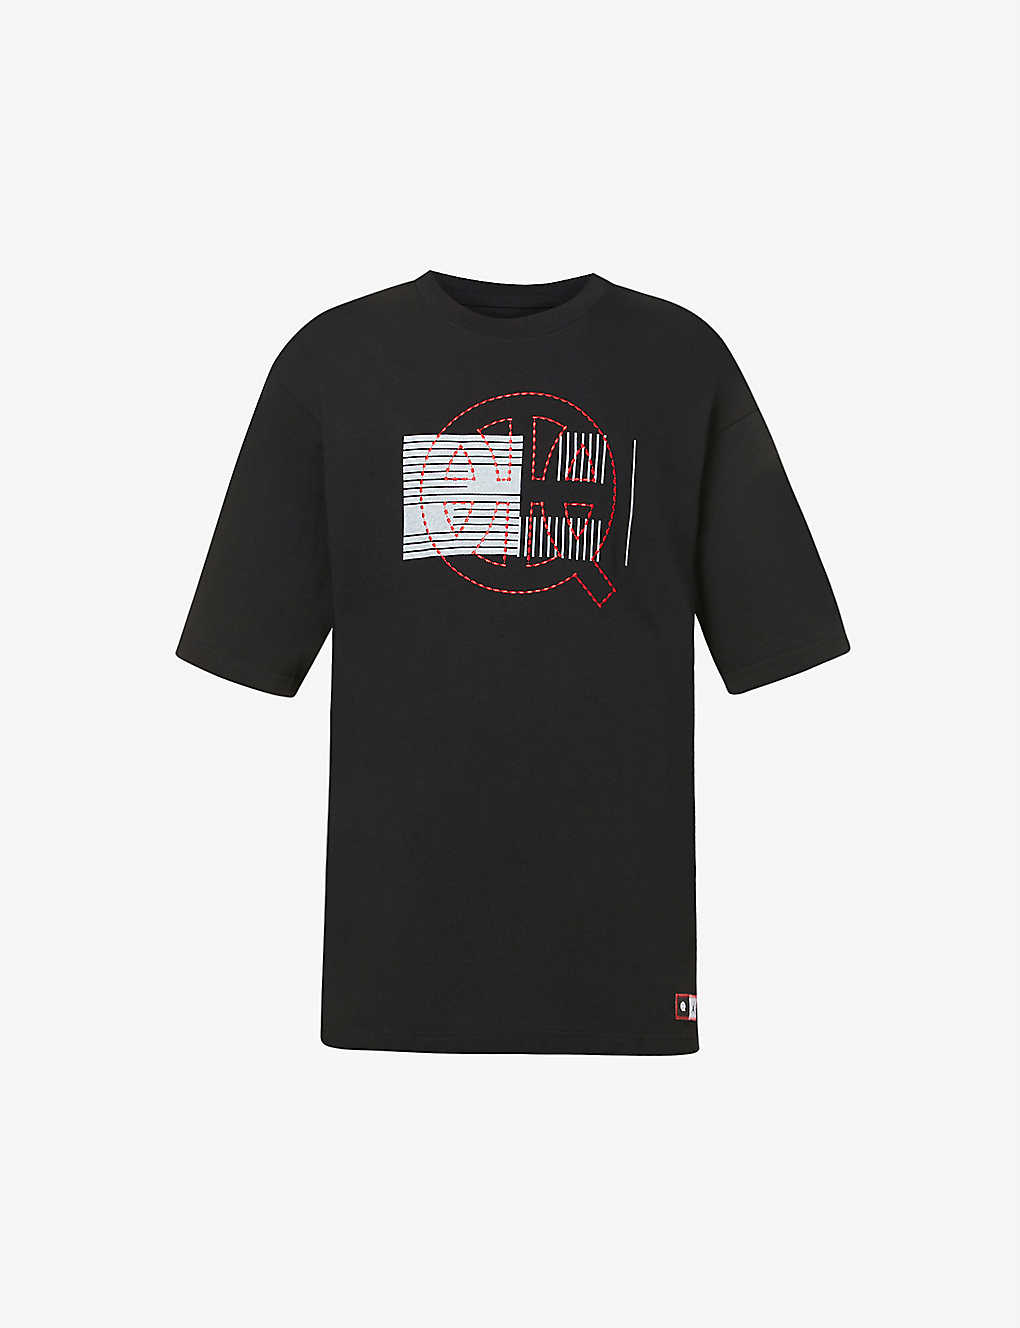 Jordan Quai 54 Event 1985 logo-embroidered cotton T-shirt(9308519)